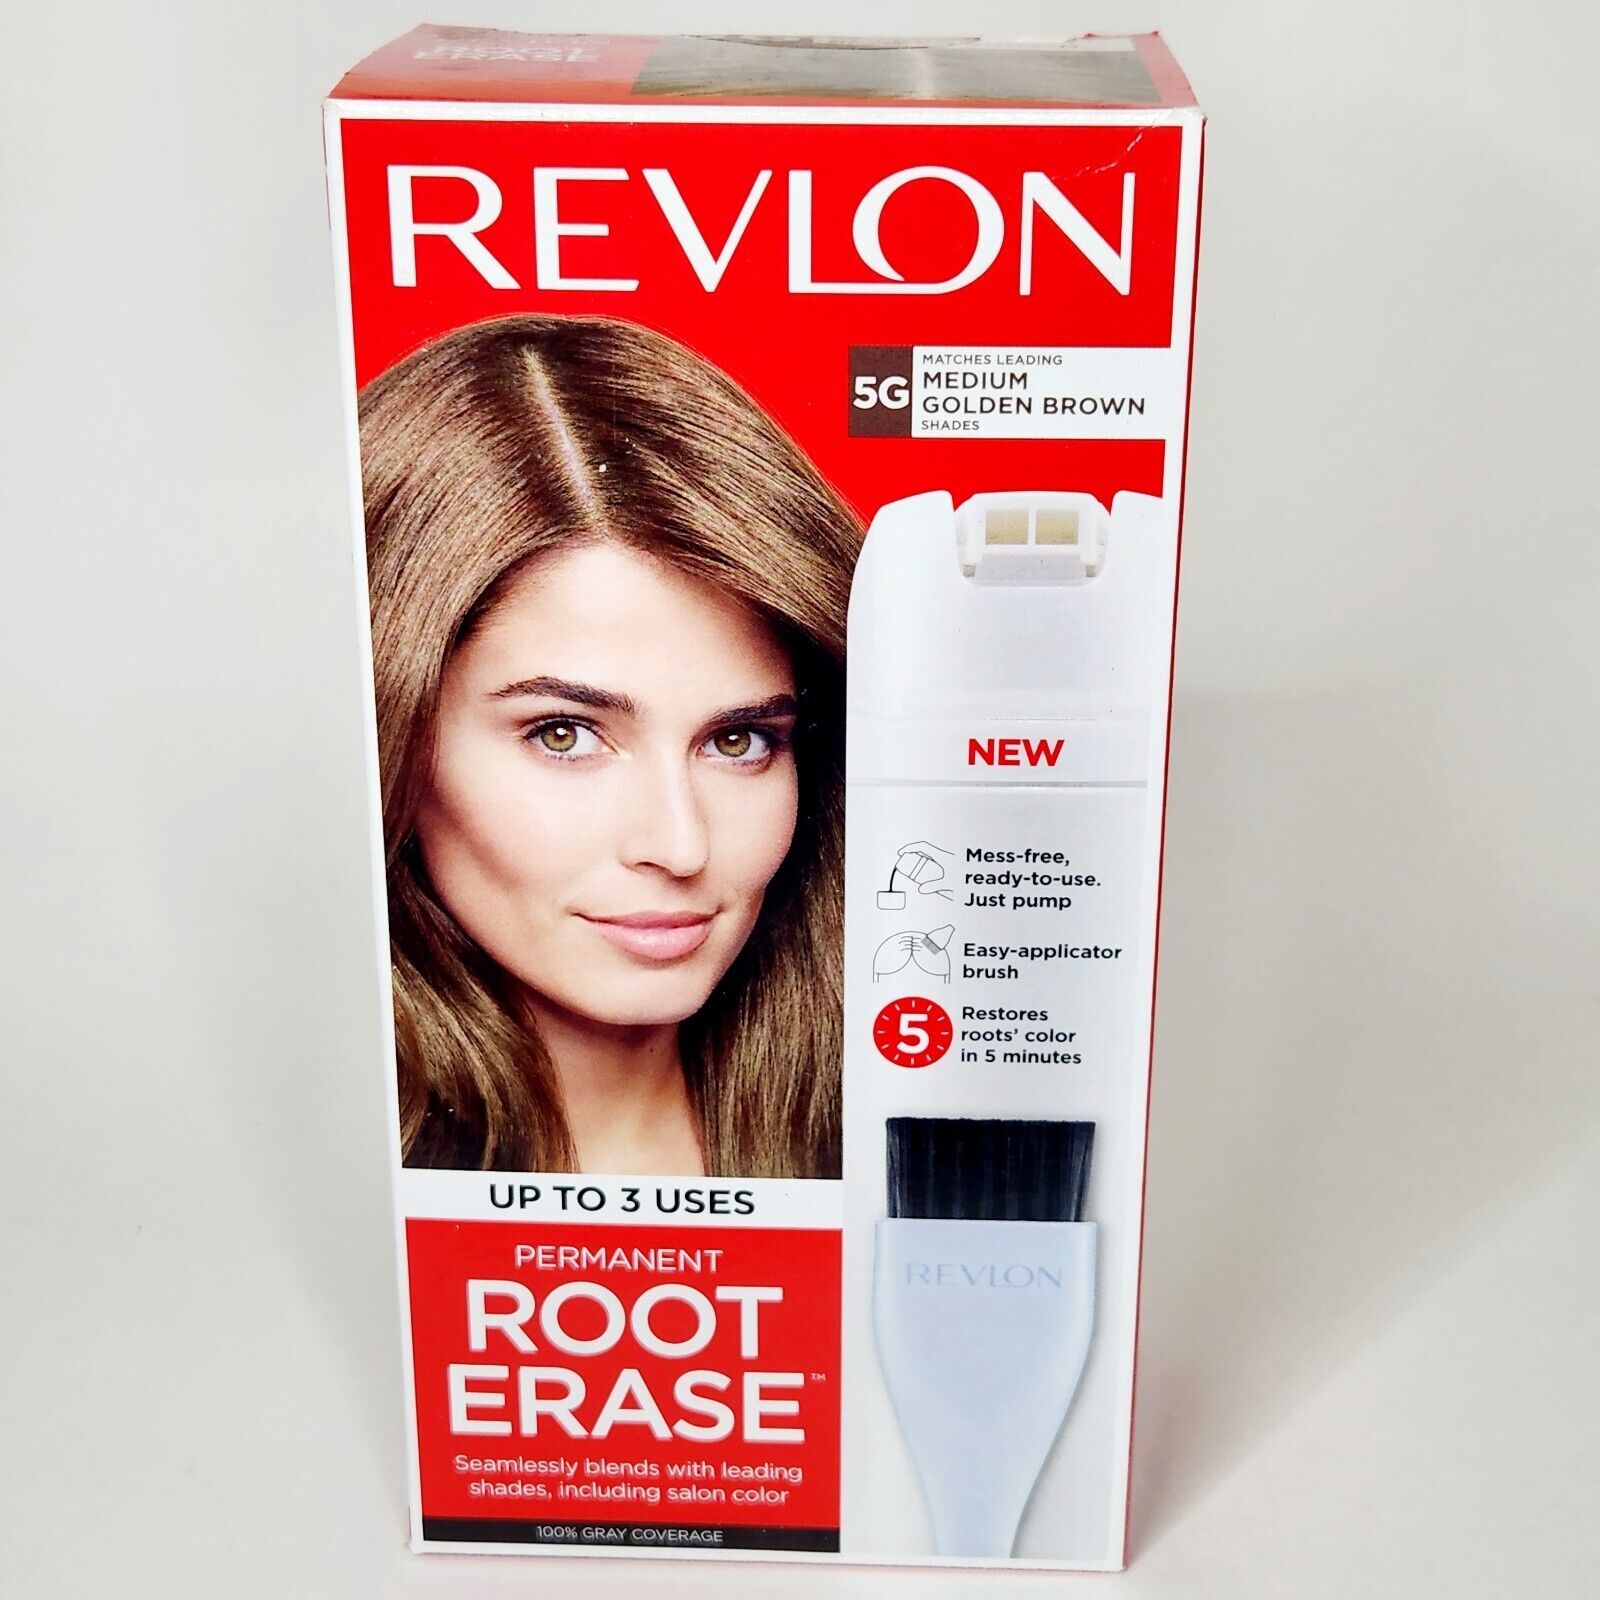 Revlon Root Erase Medium Golden Brown 5G Permanent Hair Color - Hair Color